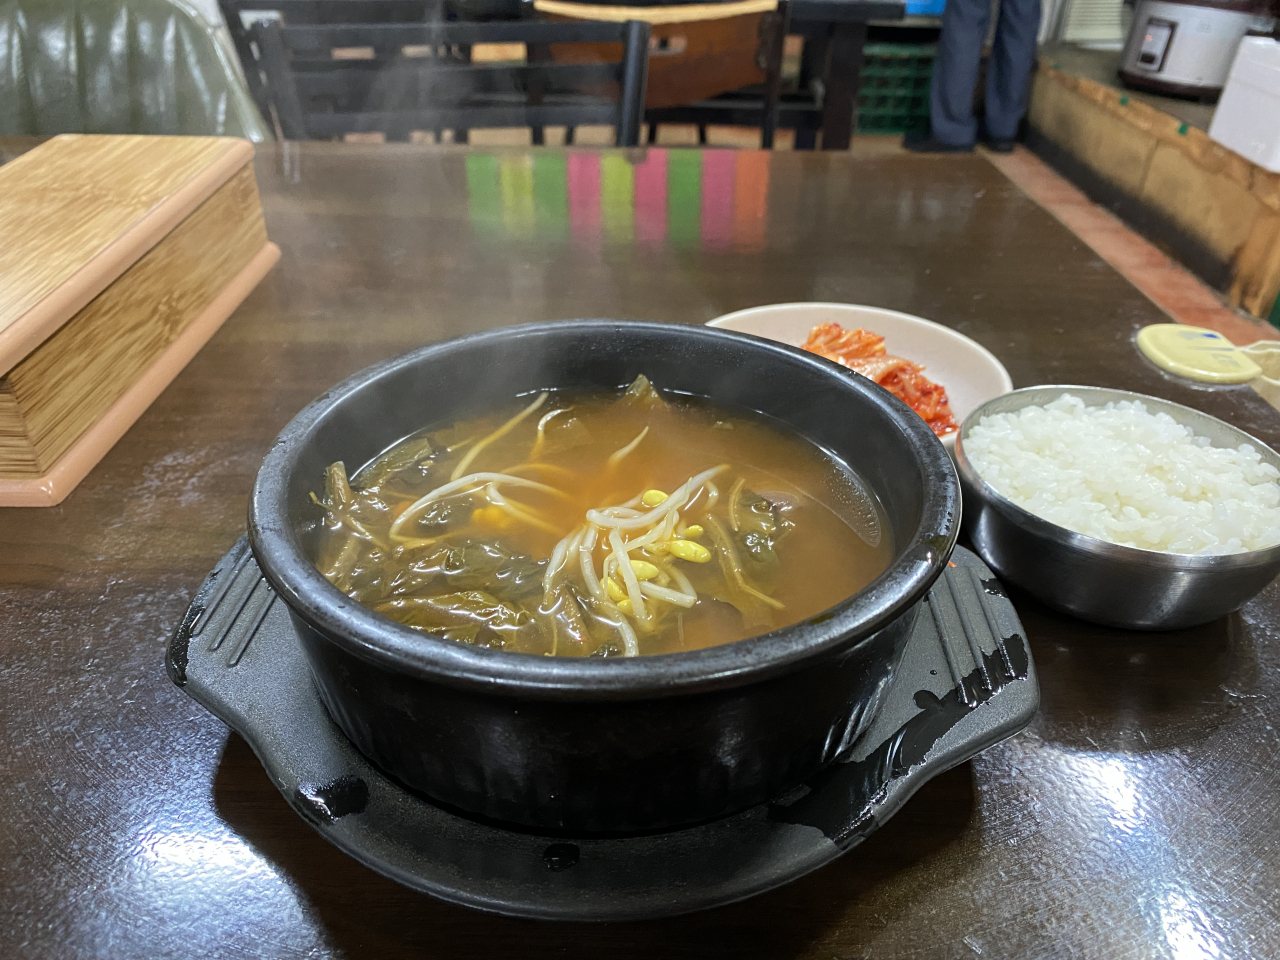 One serving of haejangguk along with a bowl of rice and kimchi is priced at 3,000 won in Nakwon-dong. (Hwang Joo-young/The Korea Herald)